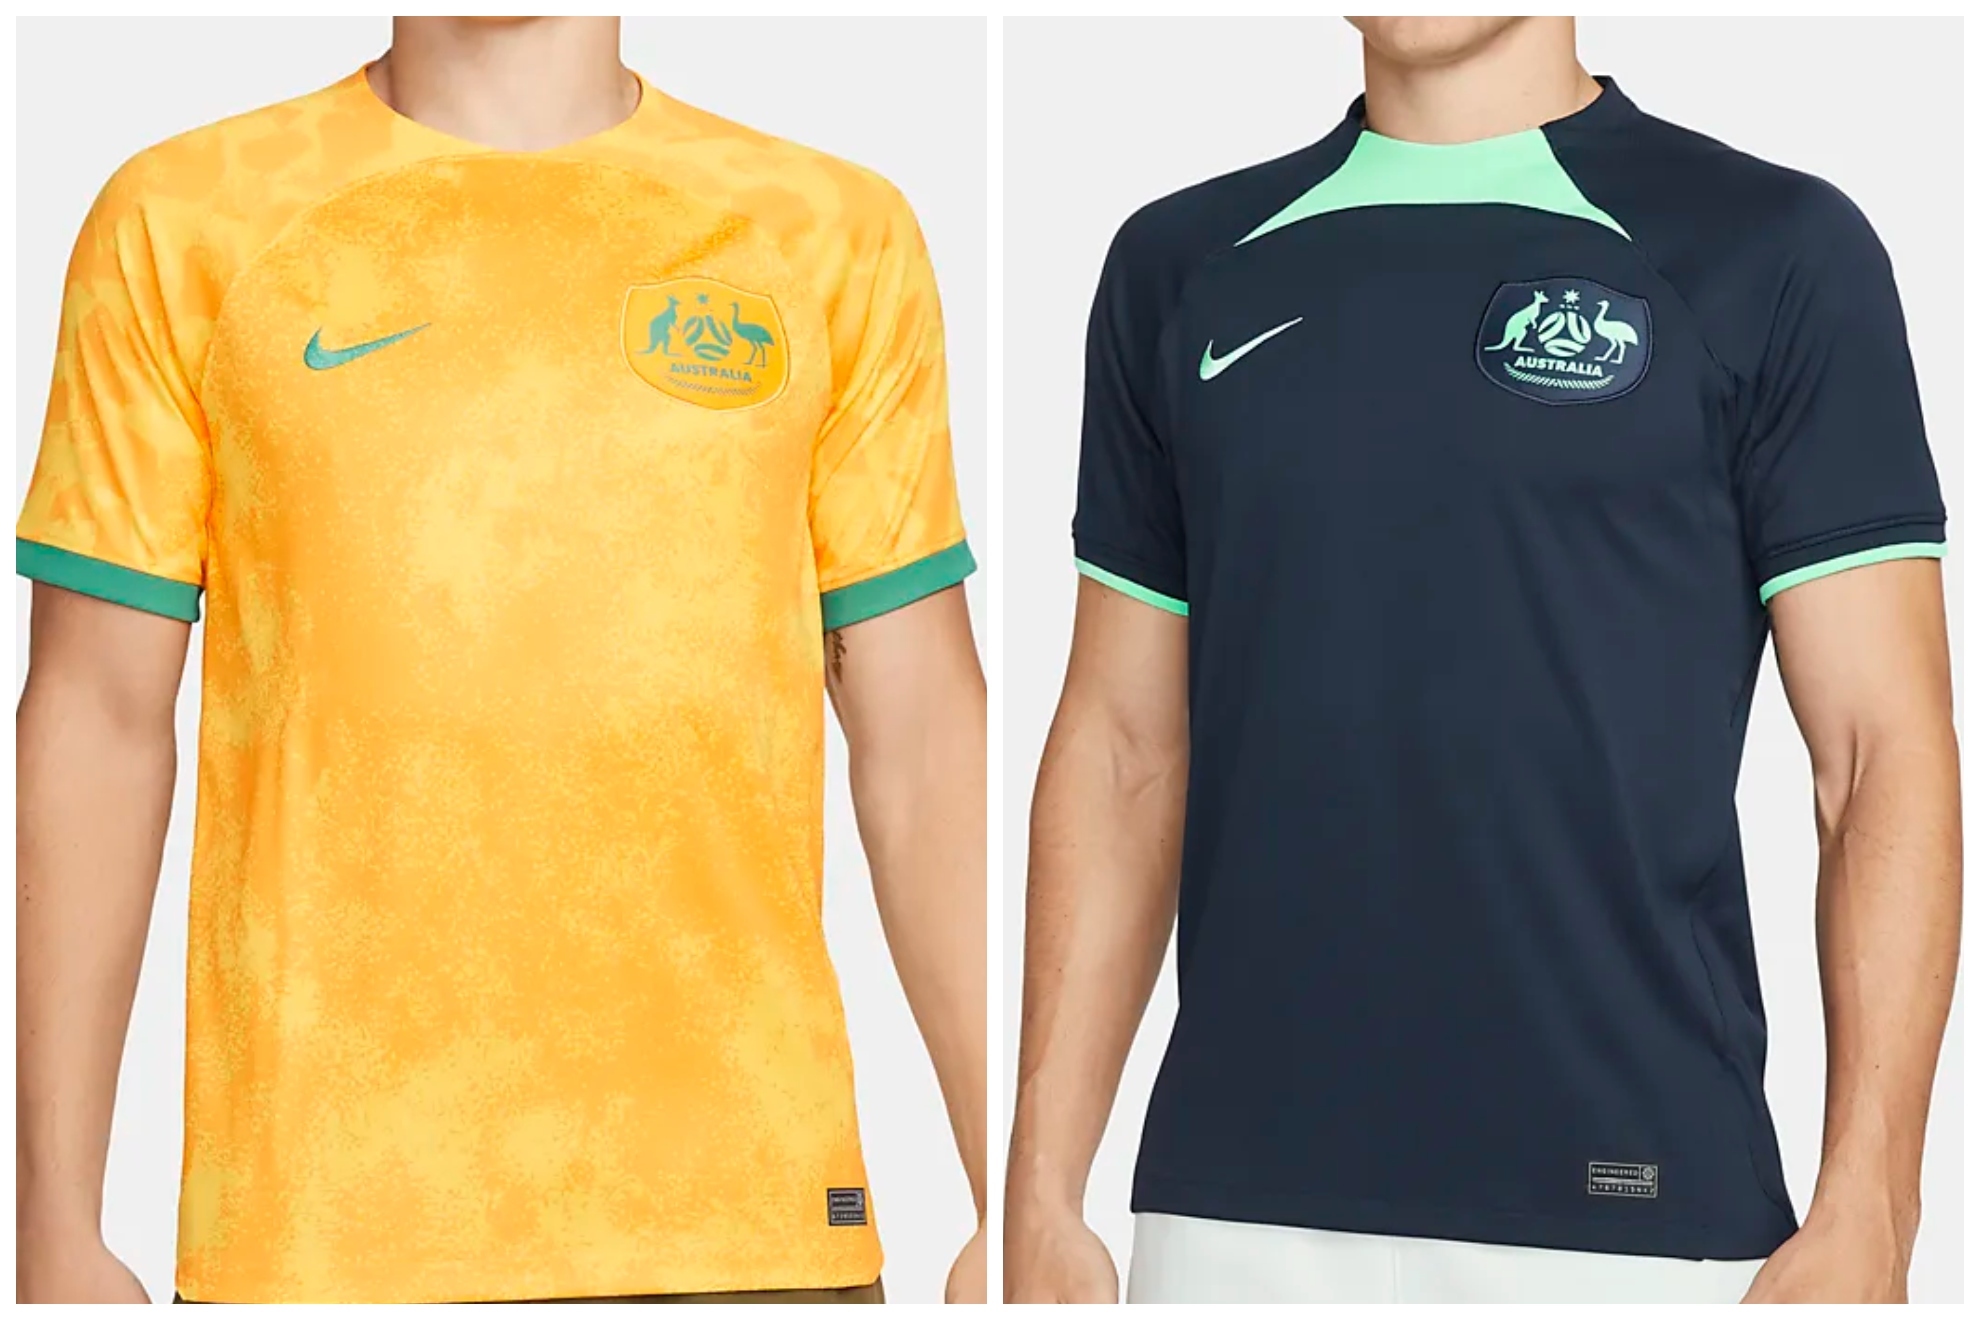 Los uniformes de Australia para el Mundial de Qatar